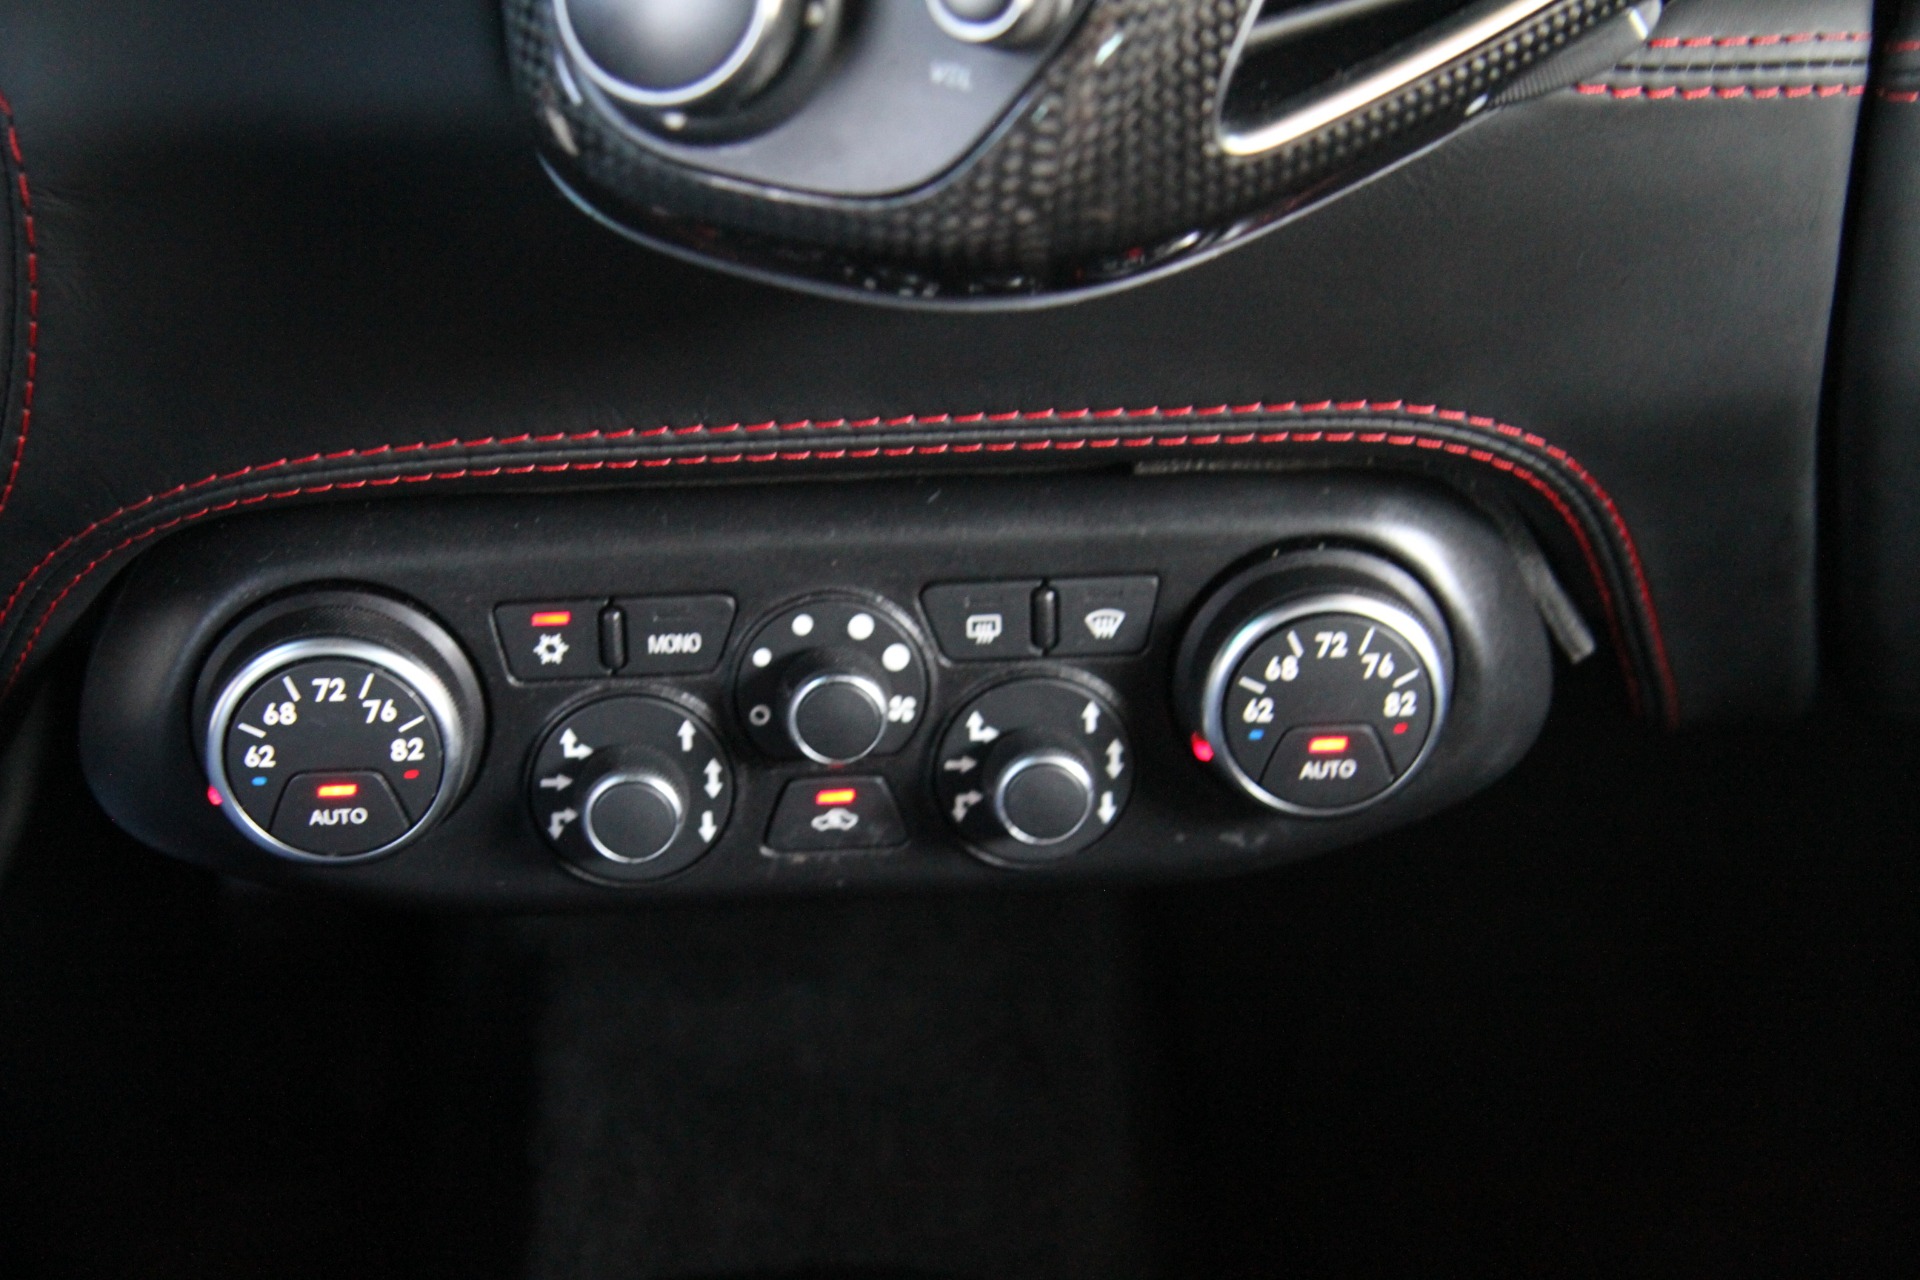 Cache console centrale Ferrari 458 Carbon F1 – AutoVM Composites